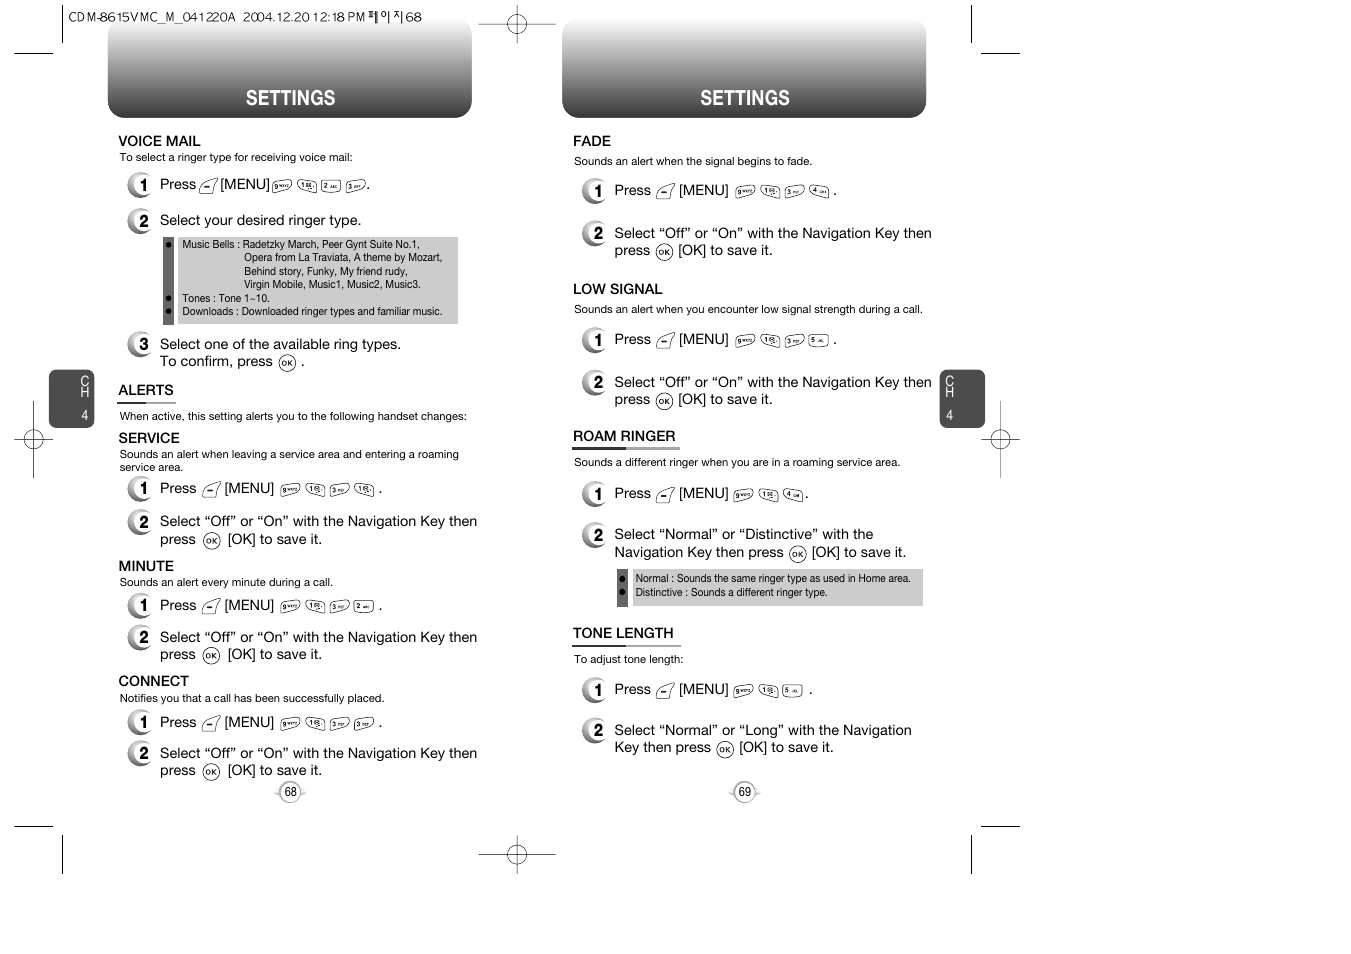 Settings | UTStarcom CDM-8615 User Manual | Page 36 / 66